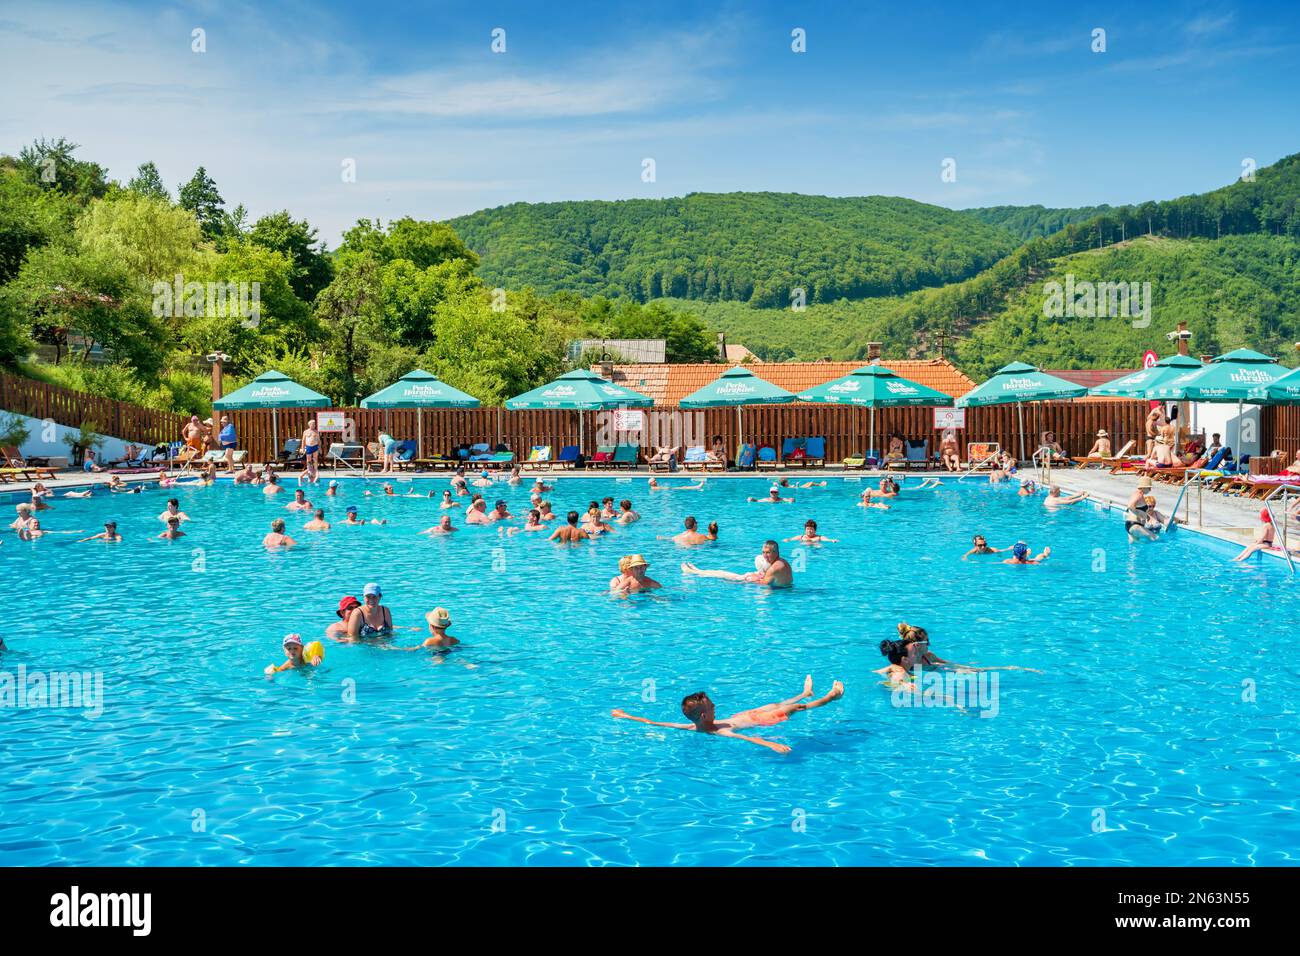 People enjoy salt water pool in Praid, Transylvania, Romania Stock Photo